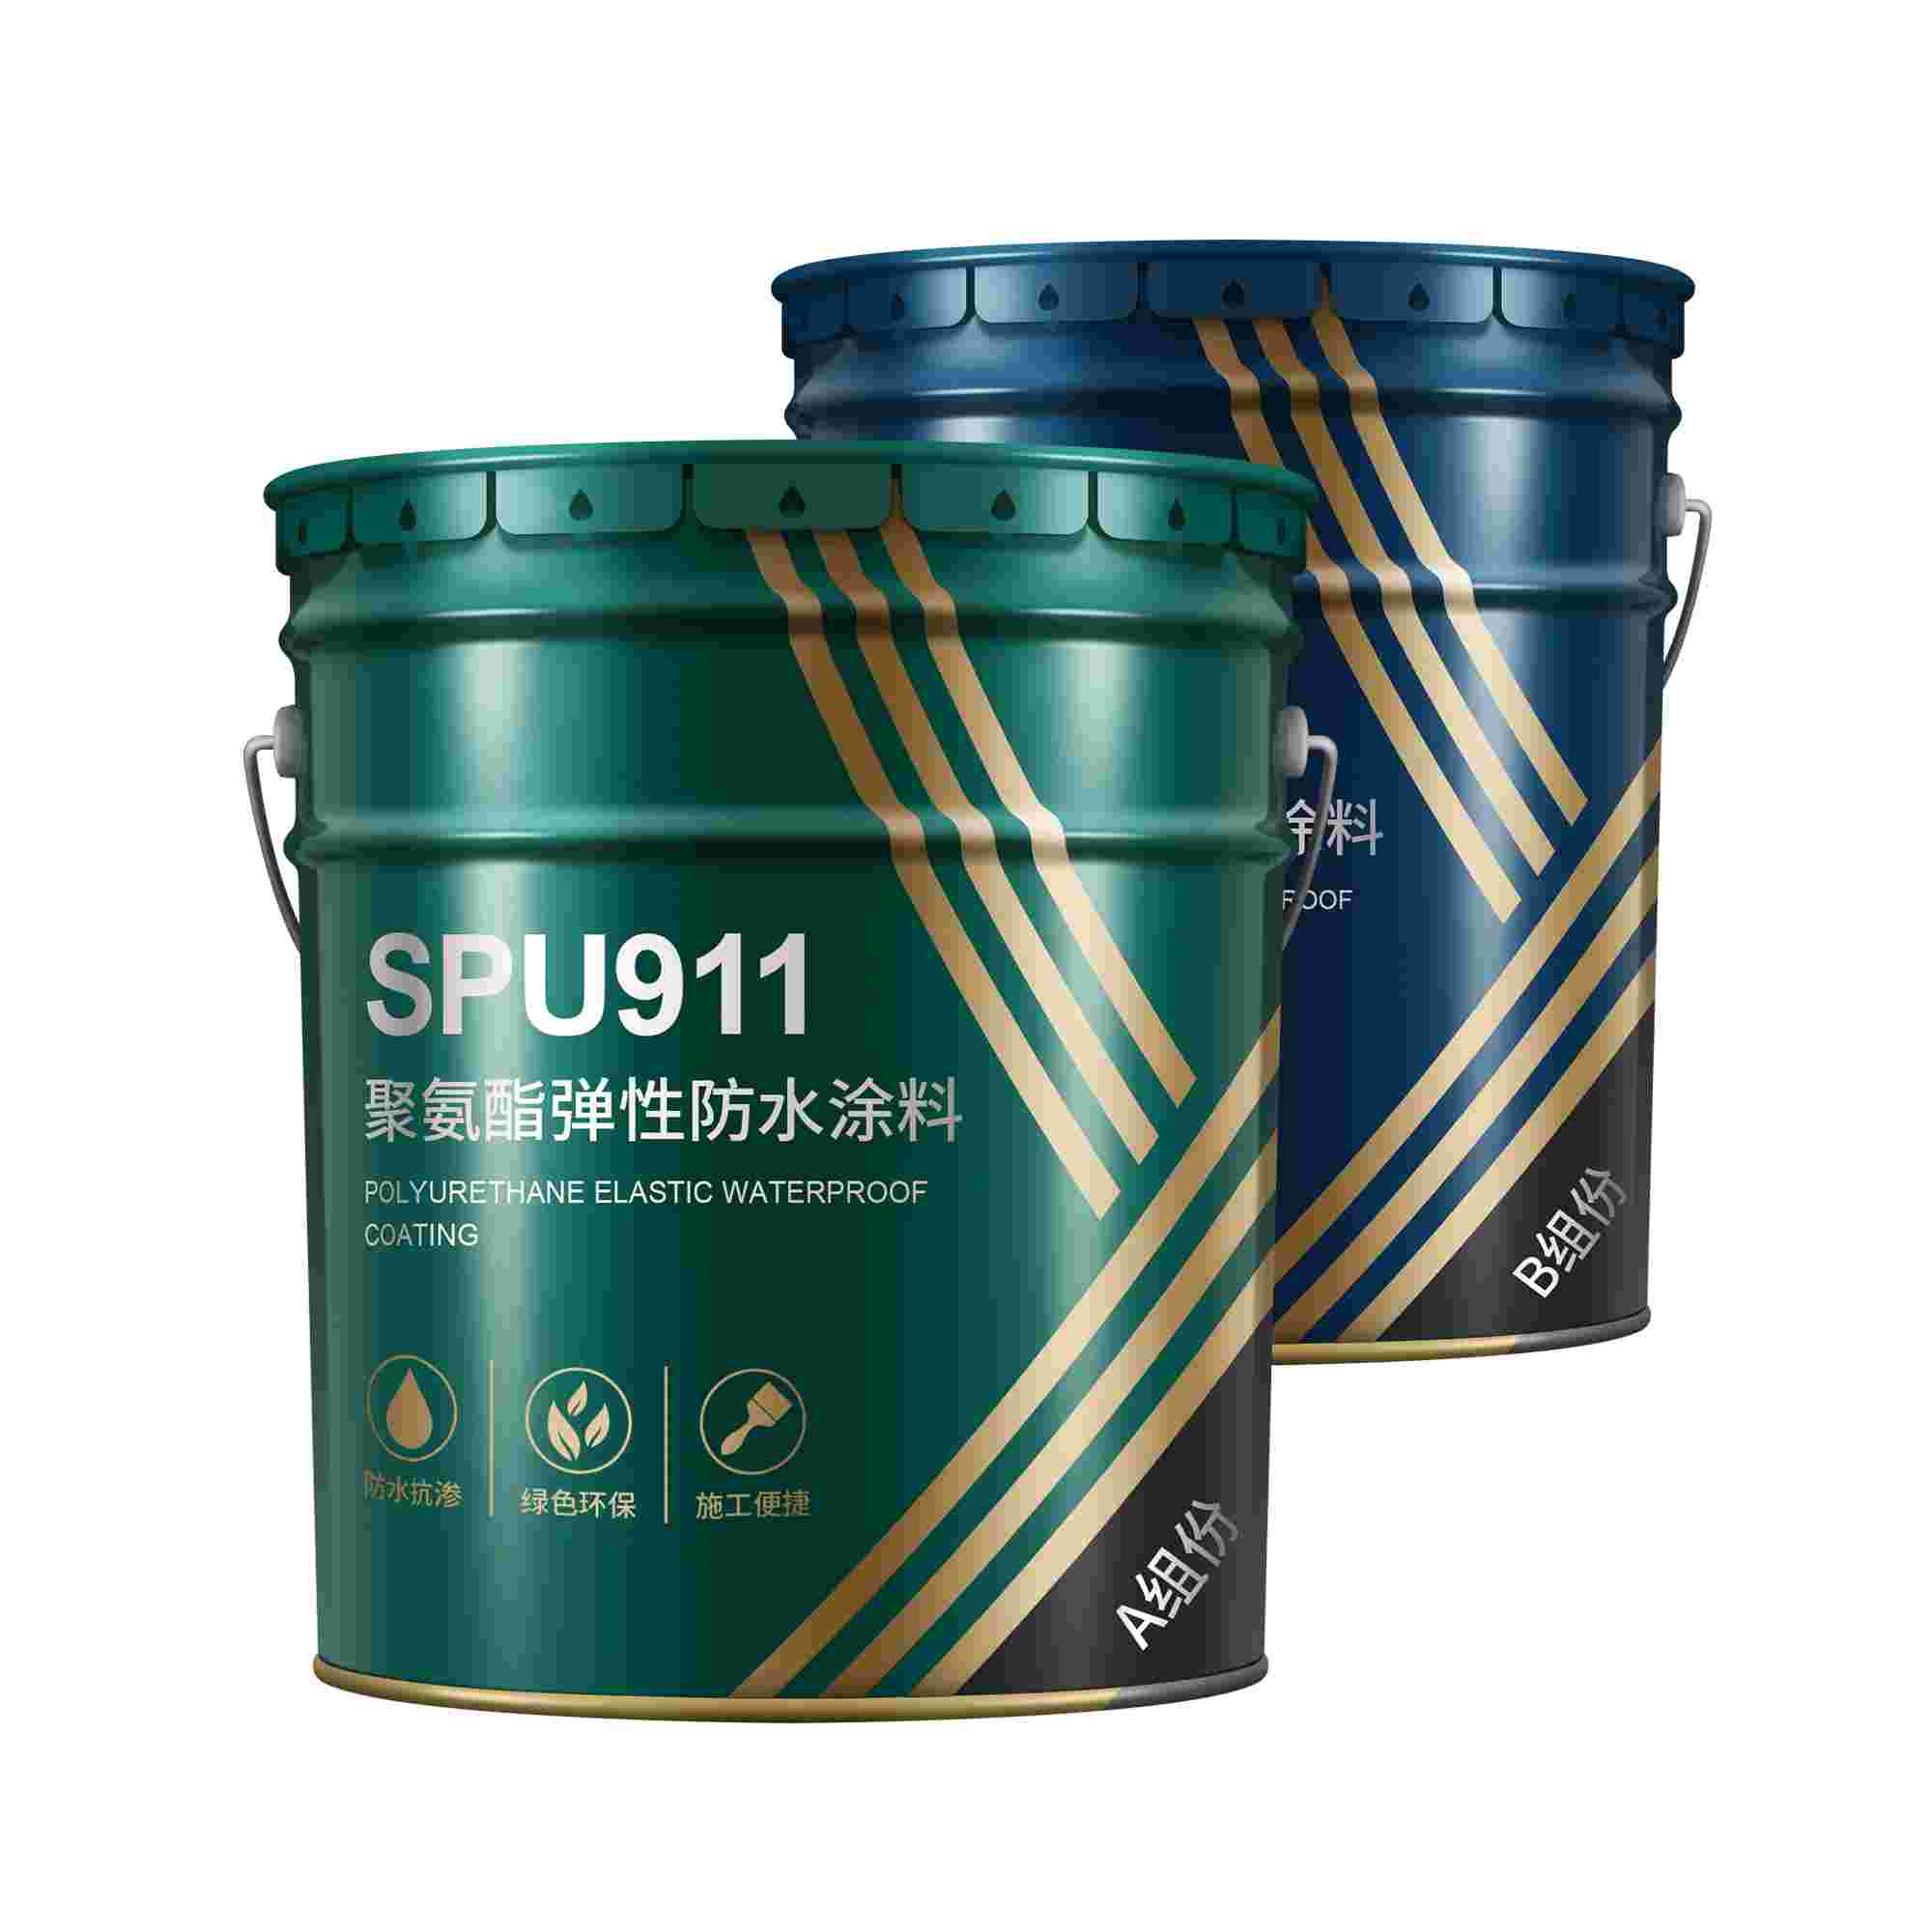 SPU911双组份聚氨酯防水涂料